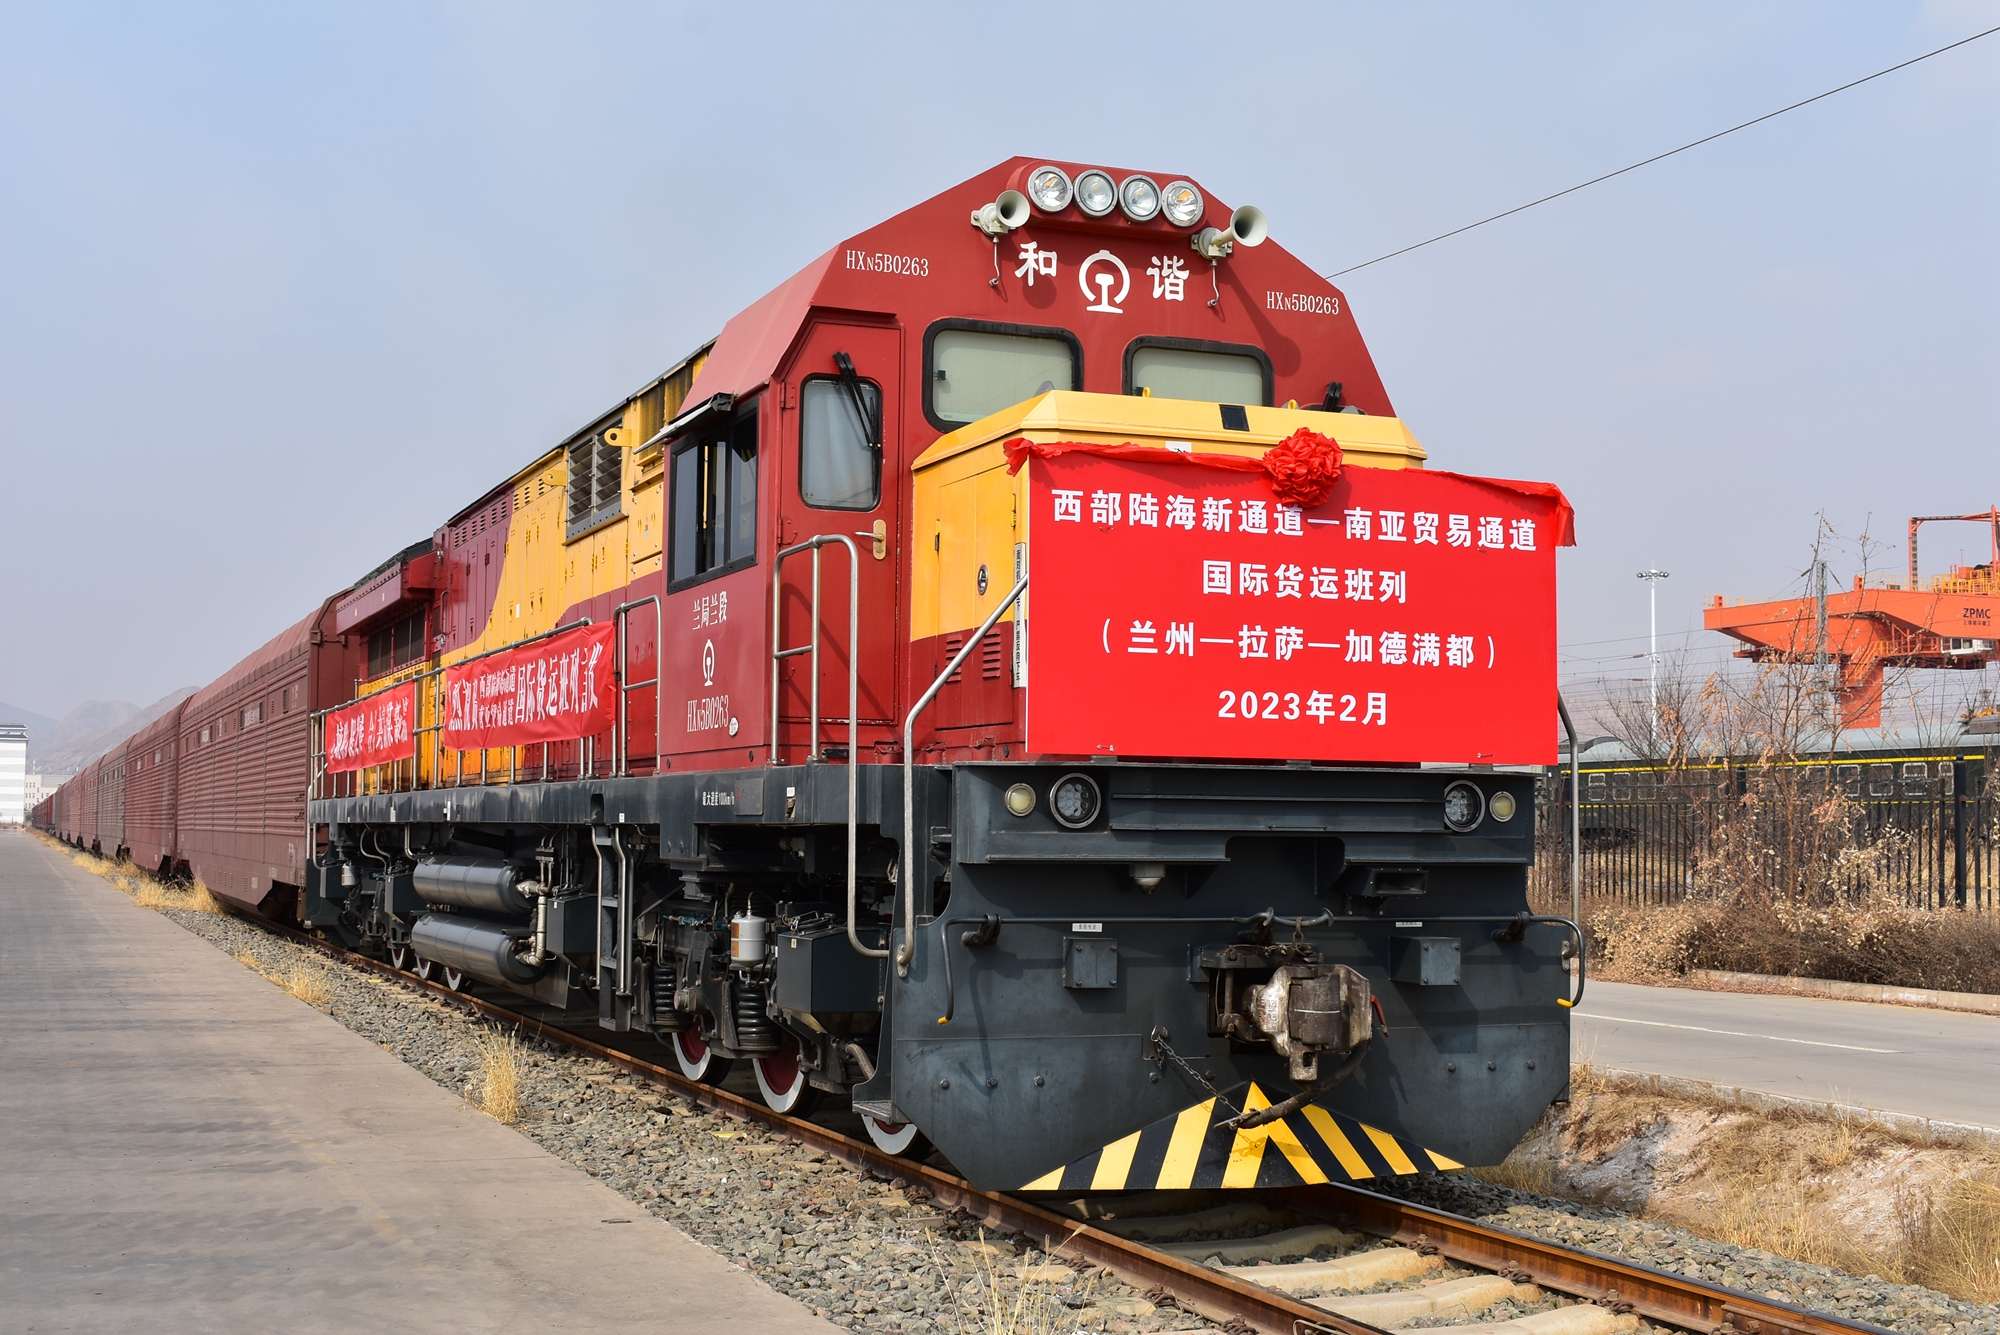 China peddles fake news, says running freight train to Kathmandu